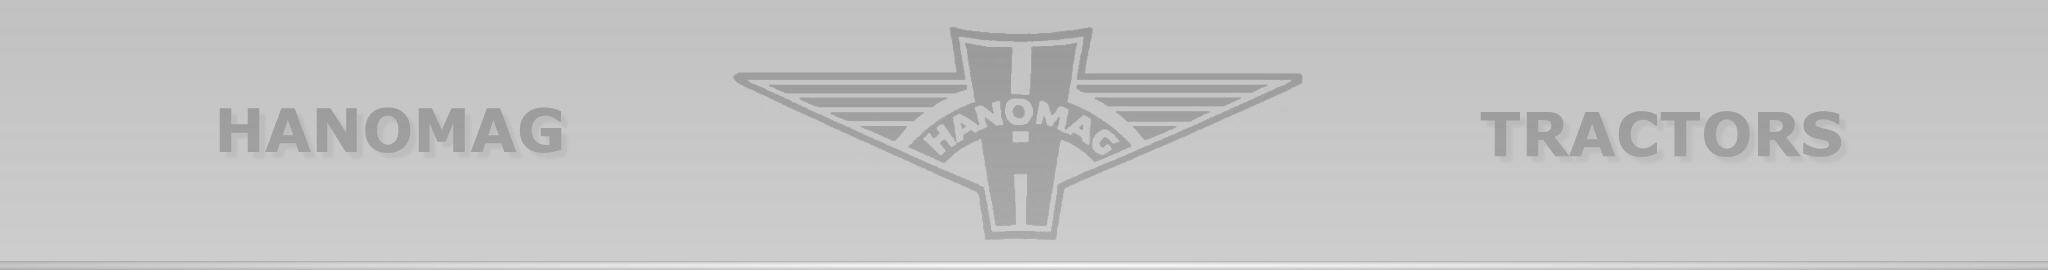 hanomag-tractors